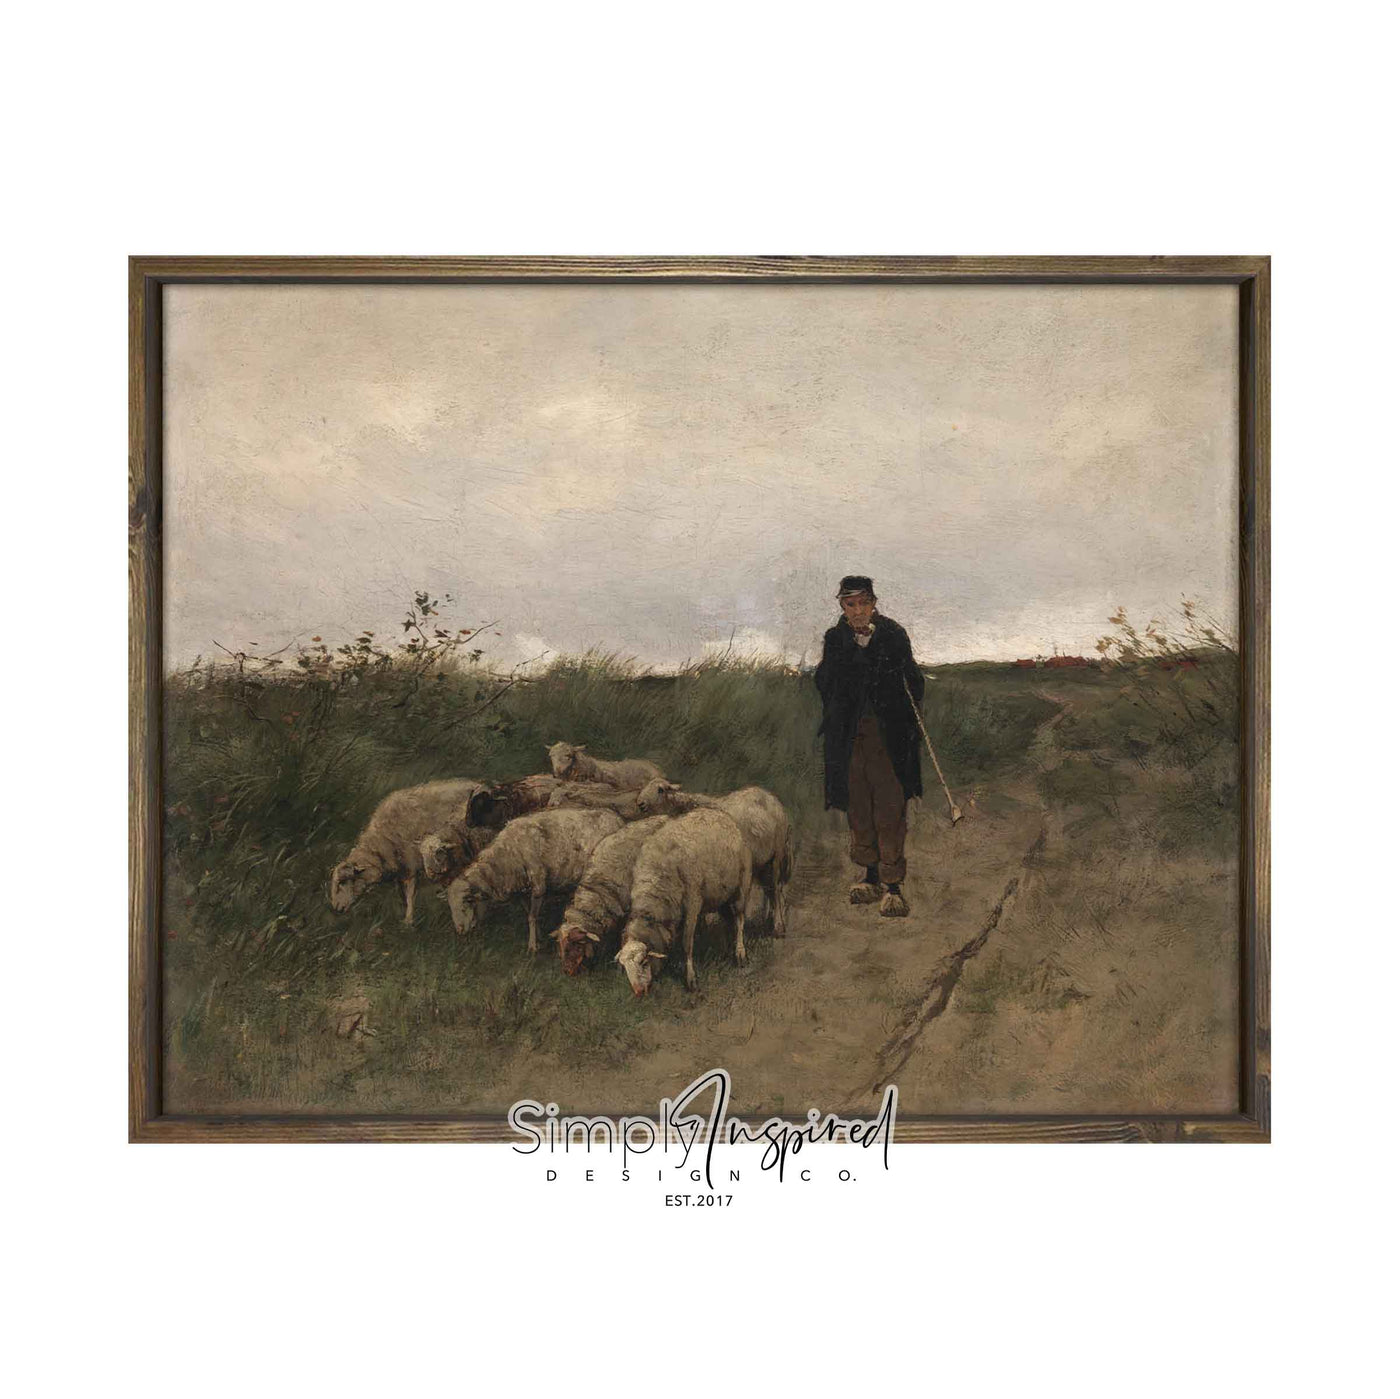 Shepherd and His Sheep